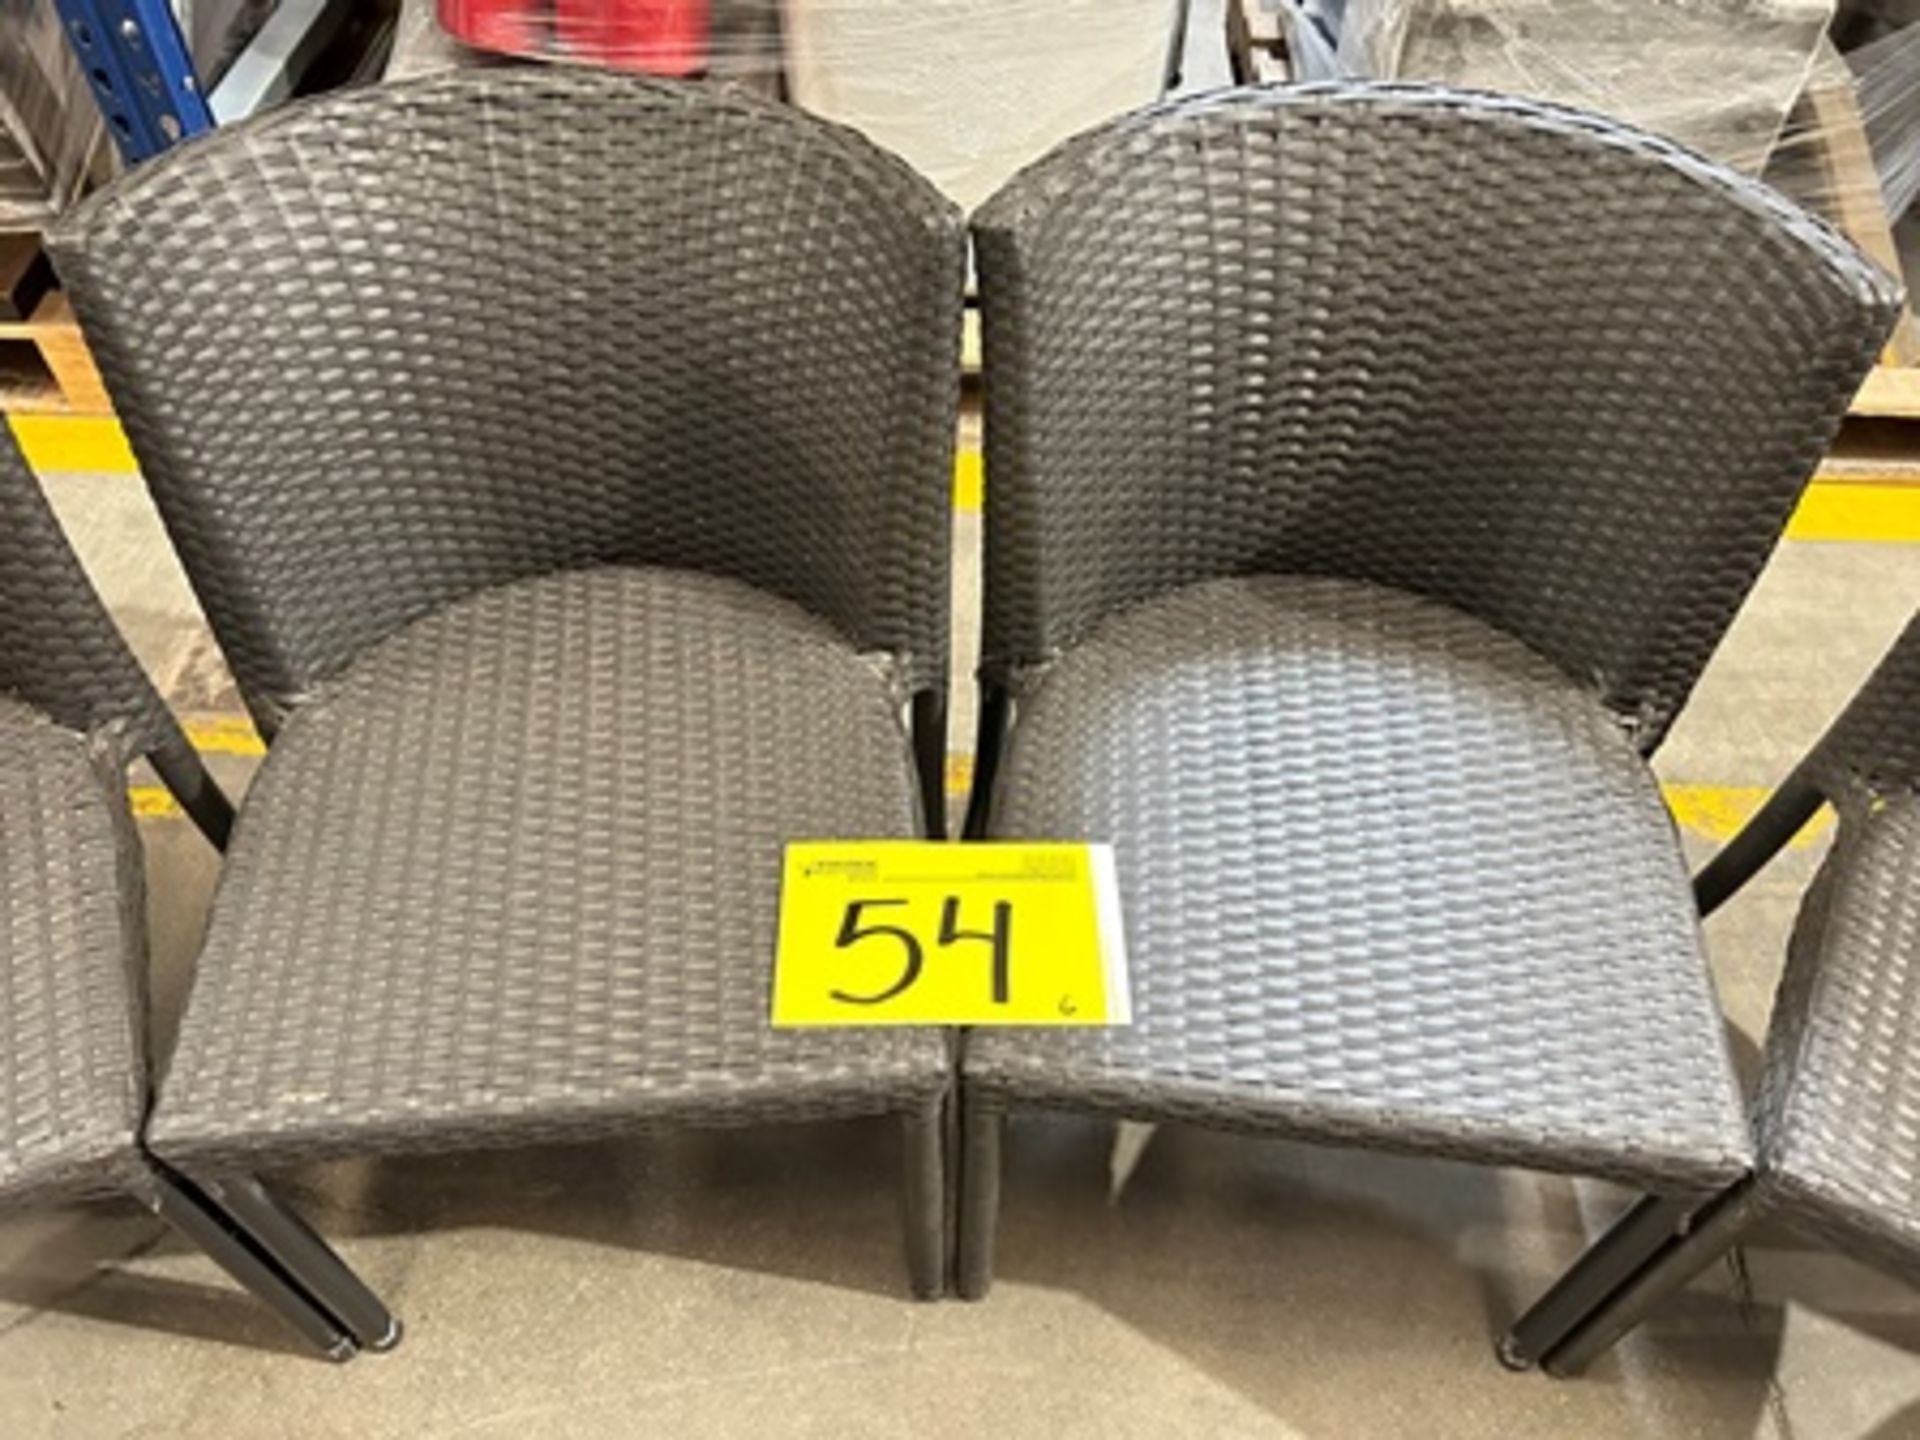 6 sillas de ratán respaldo curvo para exterior Color Café Medidas 55 cm x 62 cm x 74 cm (Equipo Usa - Image 7 of 10